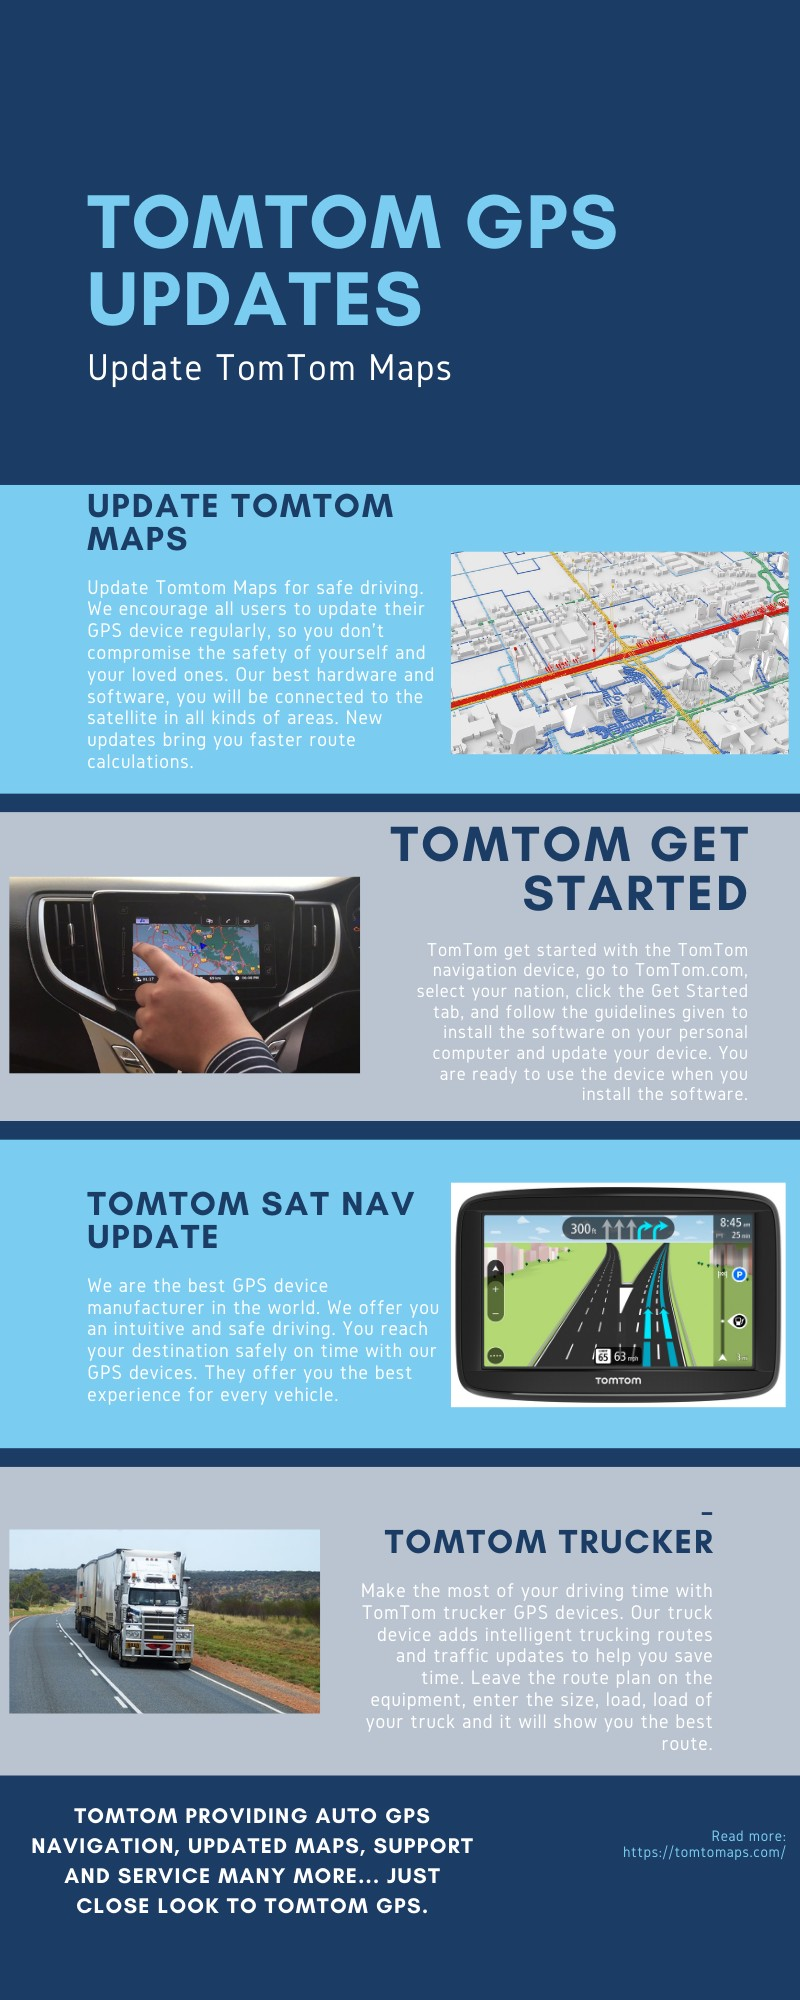 TomTom GPS Updates | Update TomTom Maps | TomTom Software